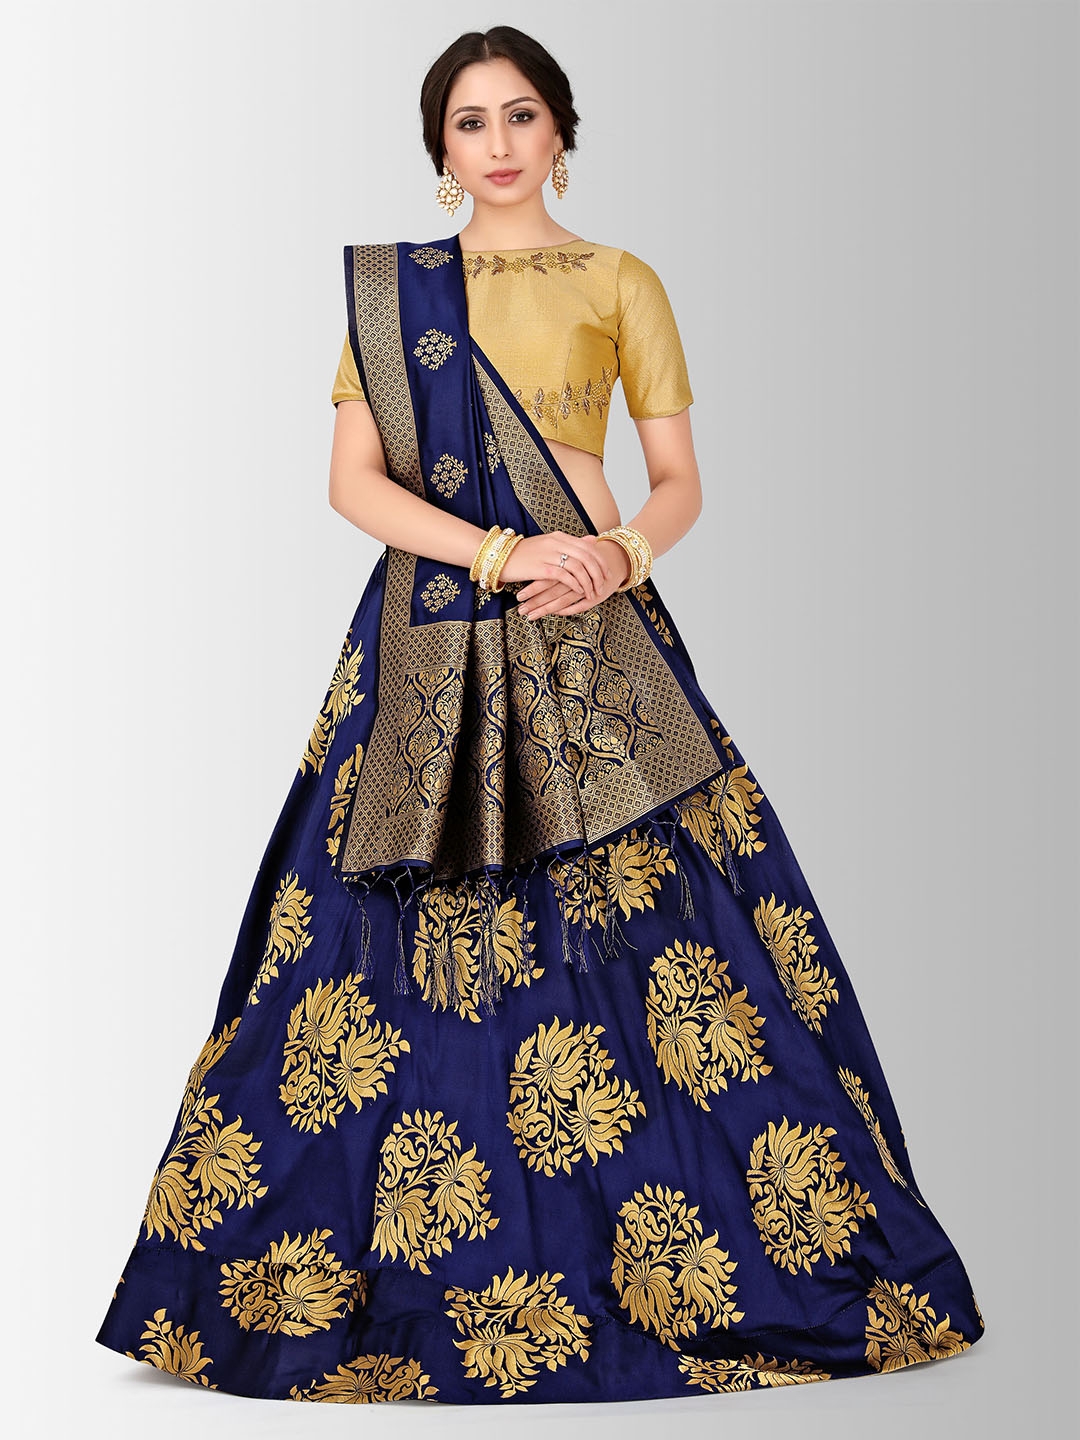 New Latest Bollywood Designer Blue And Yellow Embroidered Lehenga Choli